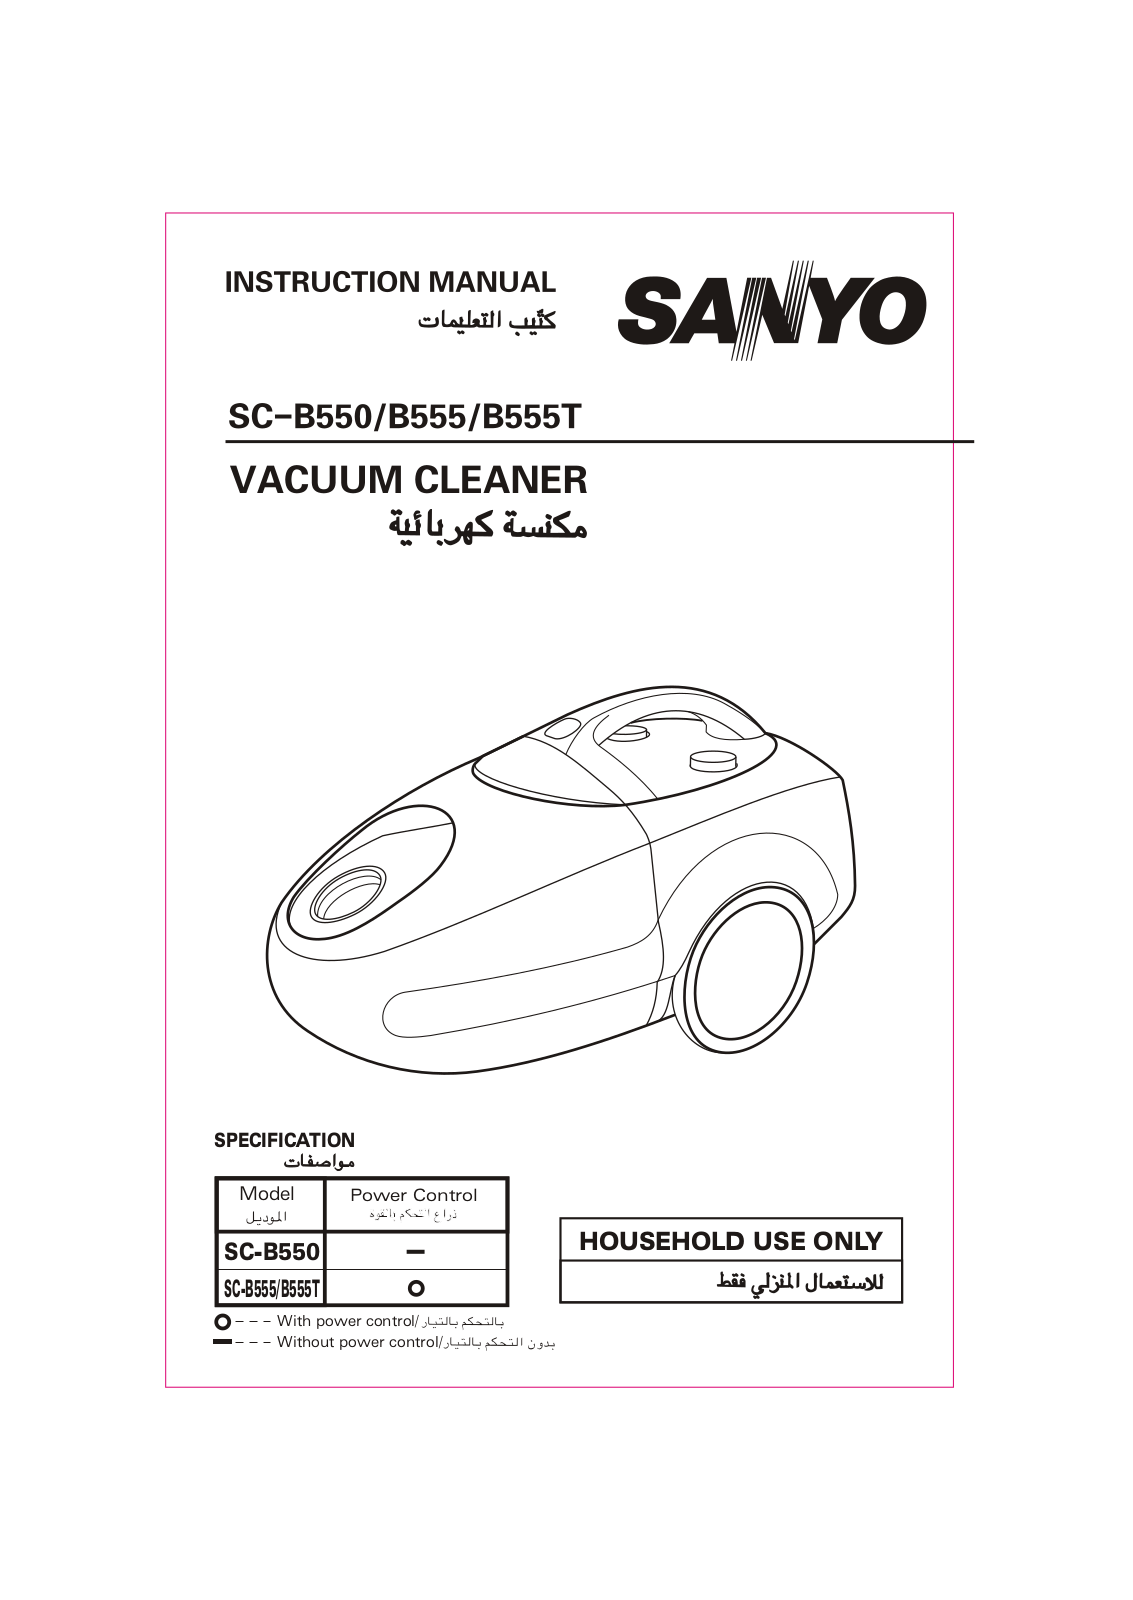 Sanyo SC-B555T, SC-B550, SC-B555 User Manual